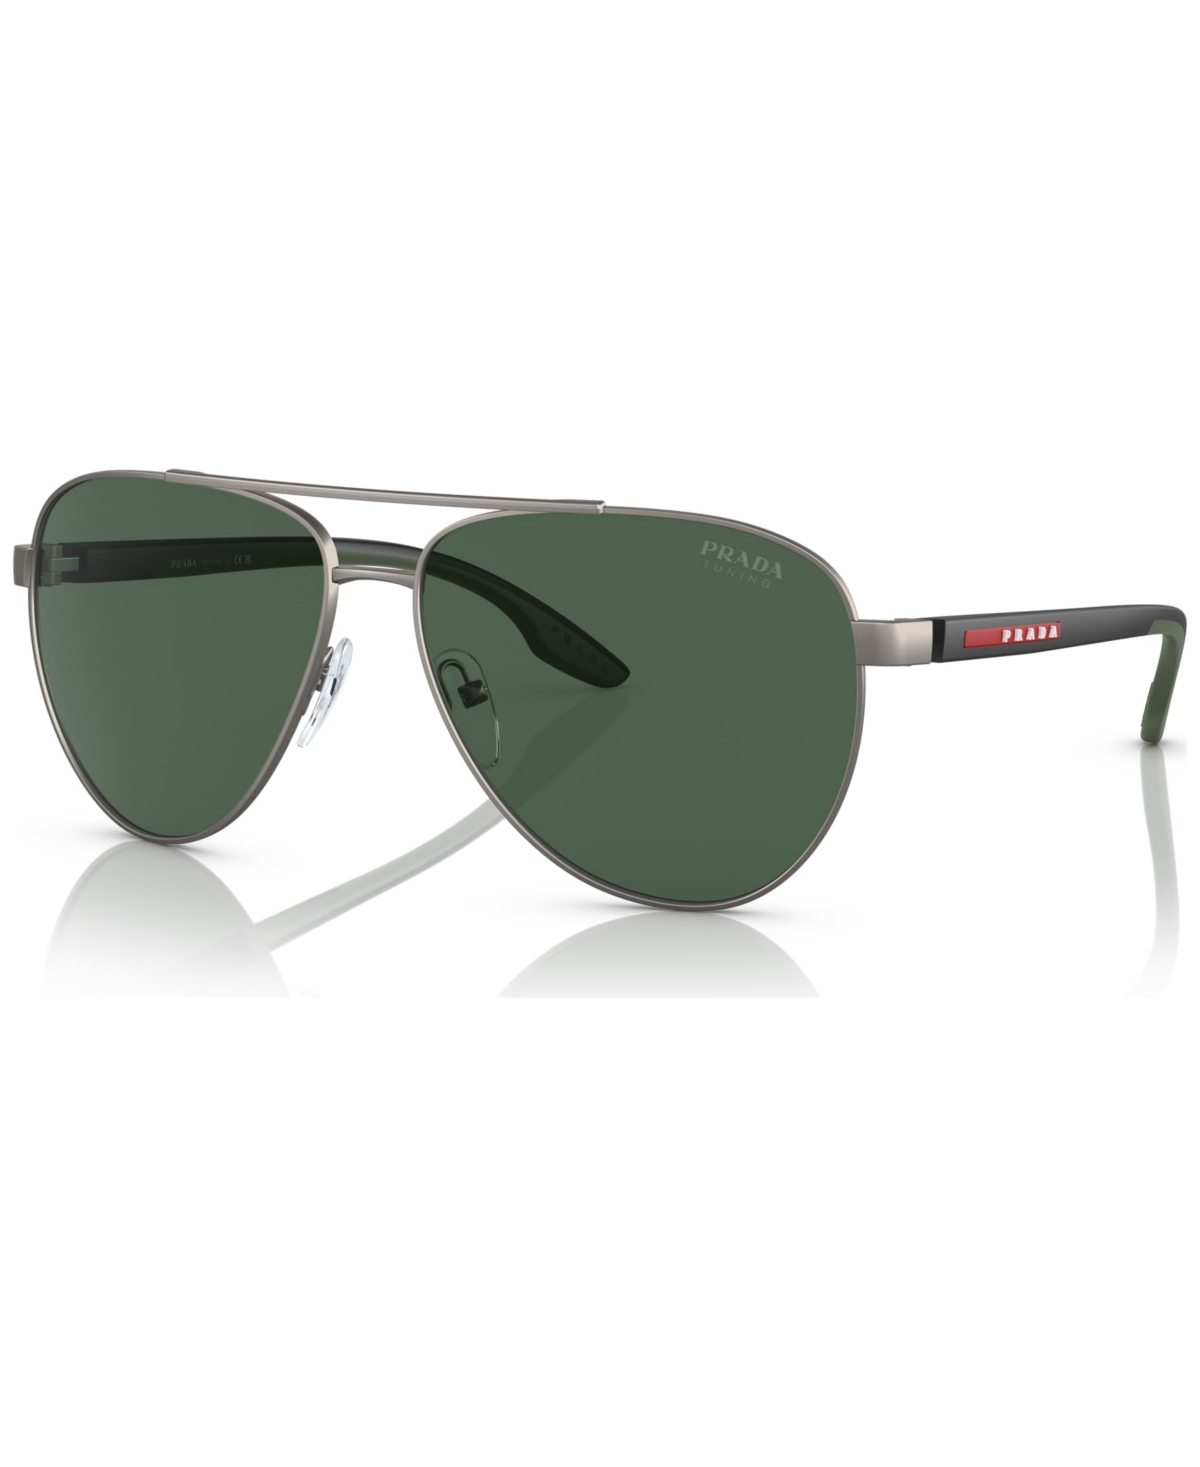 Prada Men's Sunglasses, Ps 50ys62-x In Silver-tone